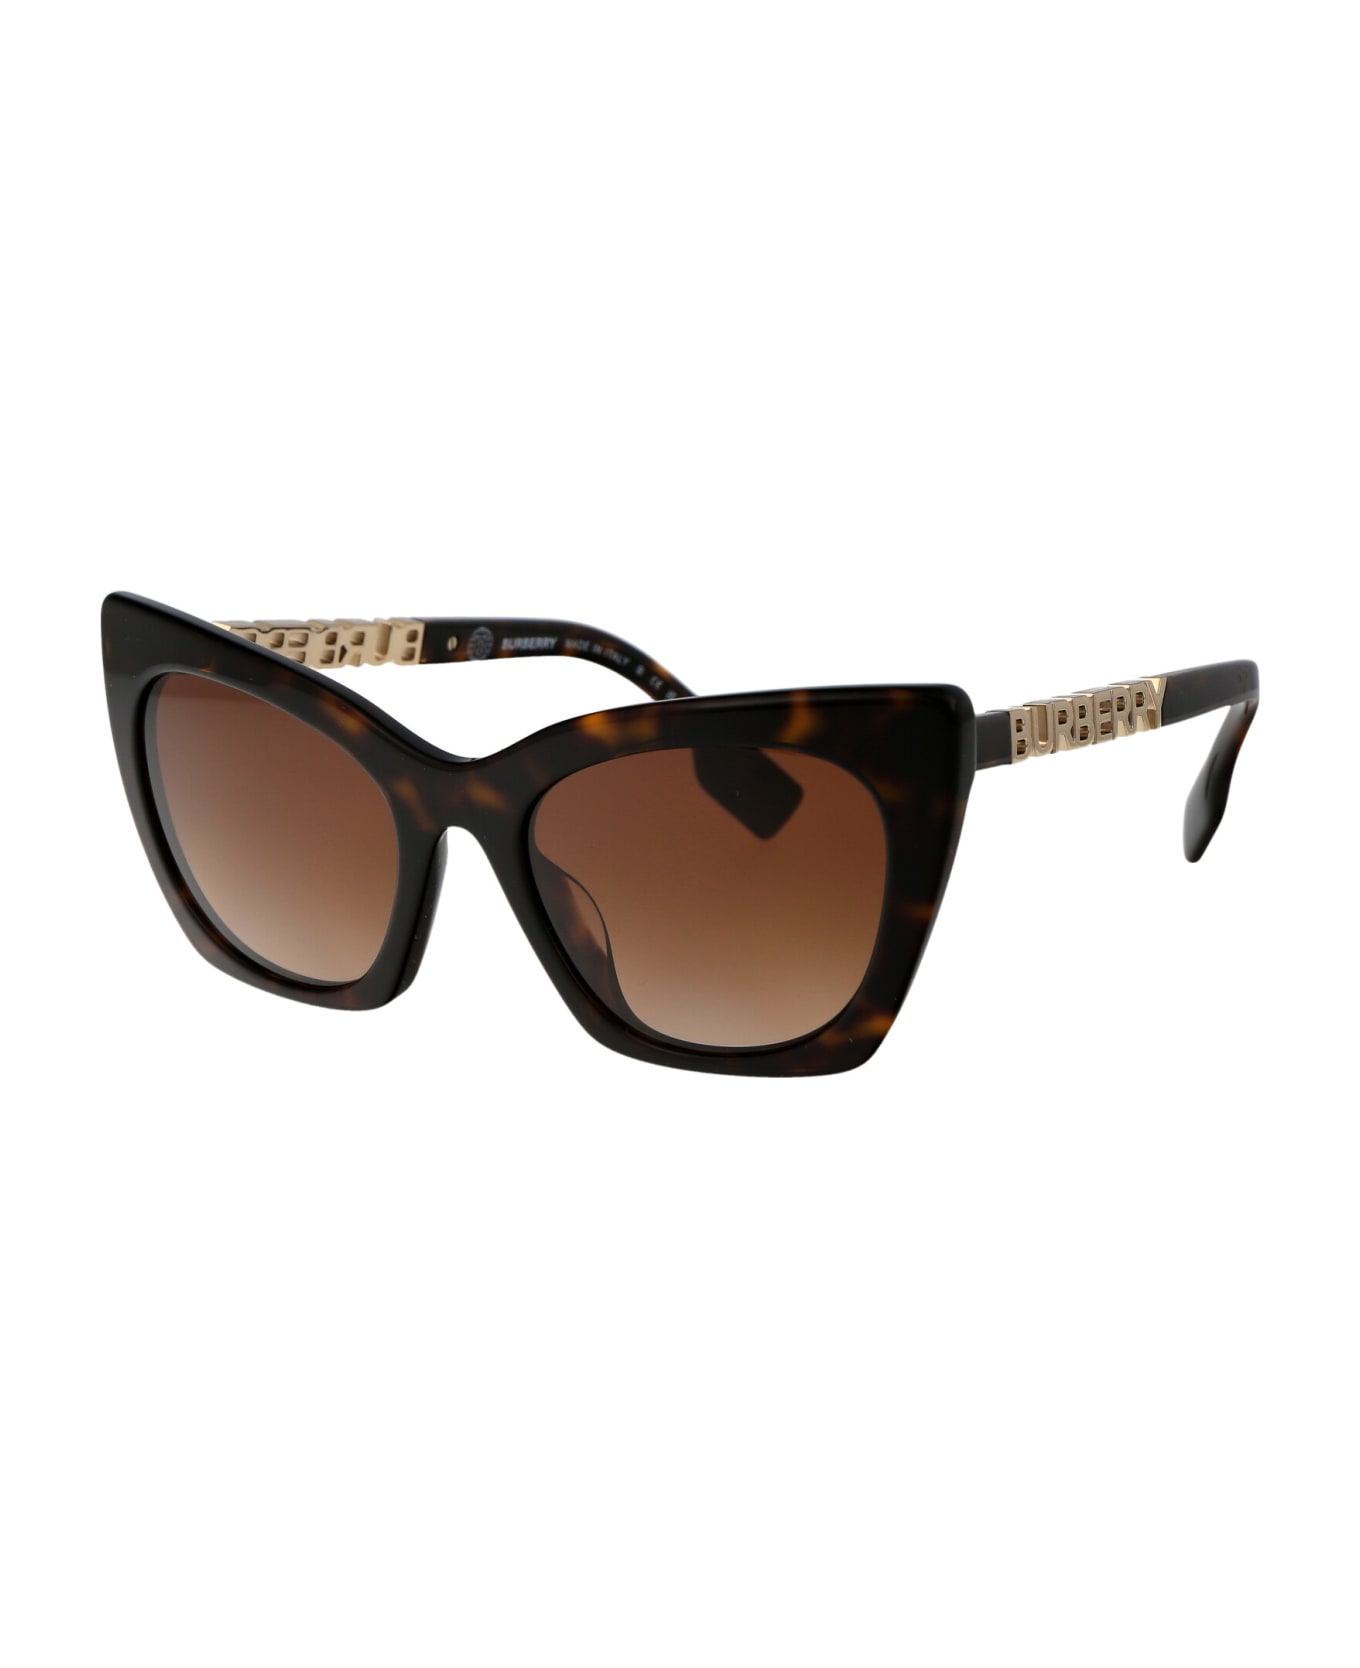 Burberry Eyewear Marianne Sunglasses - 300213 DARK HAVANA サングラス